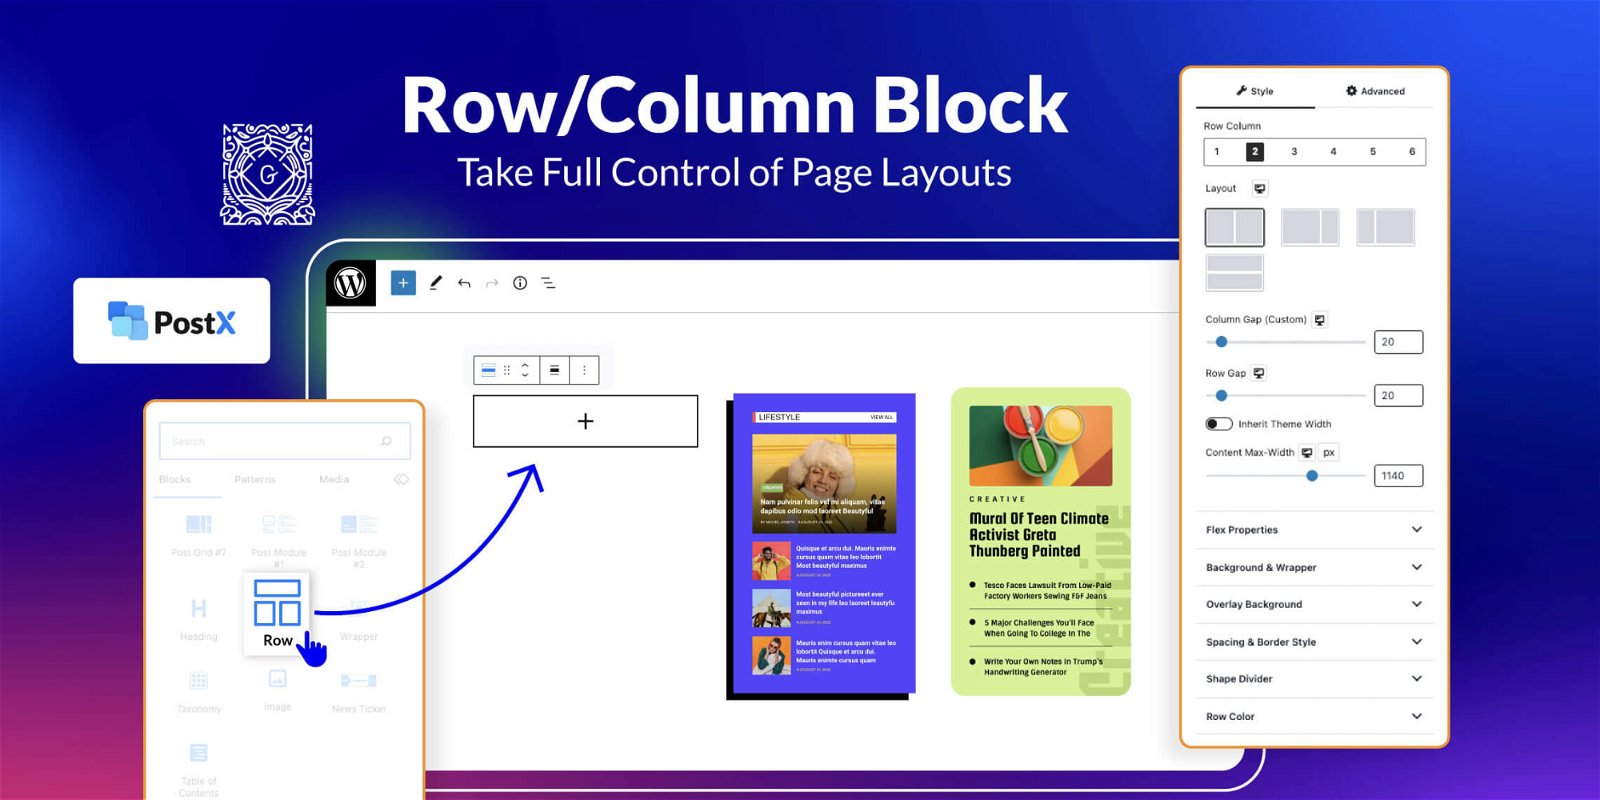 Row/Column Block